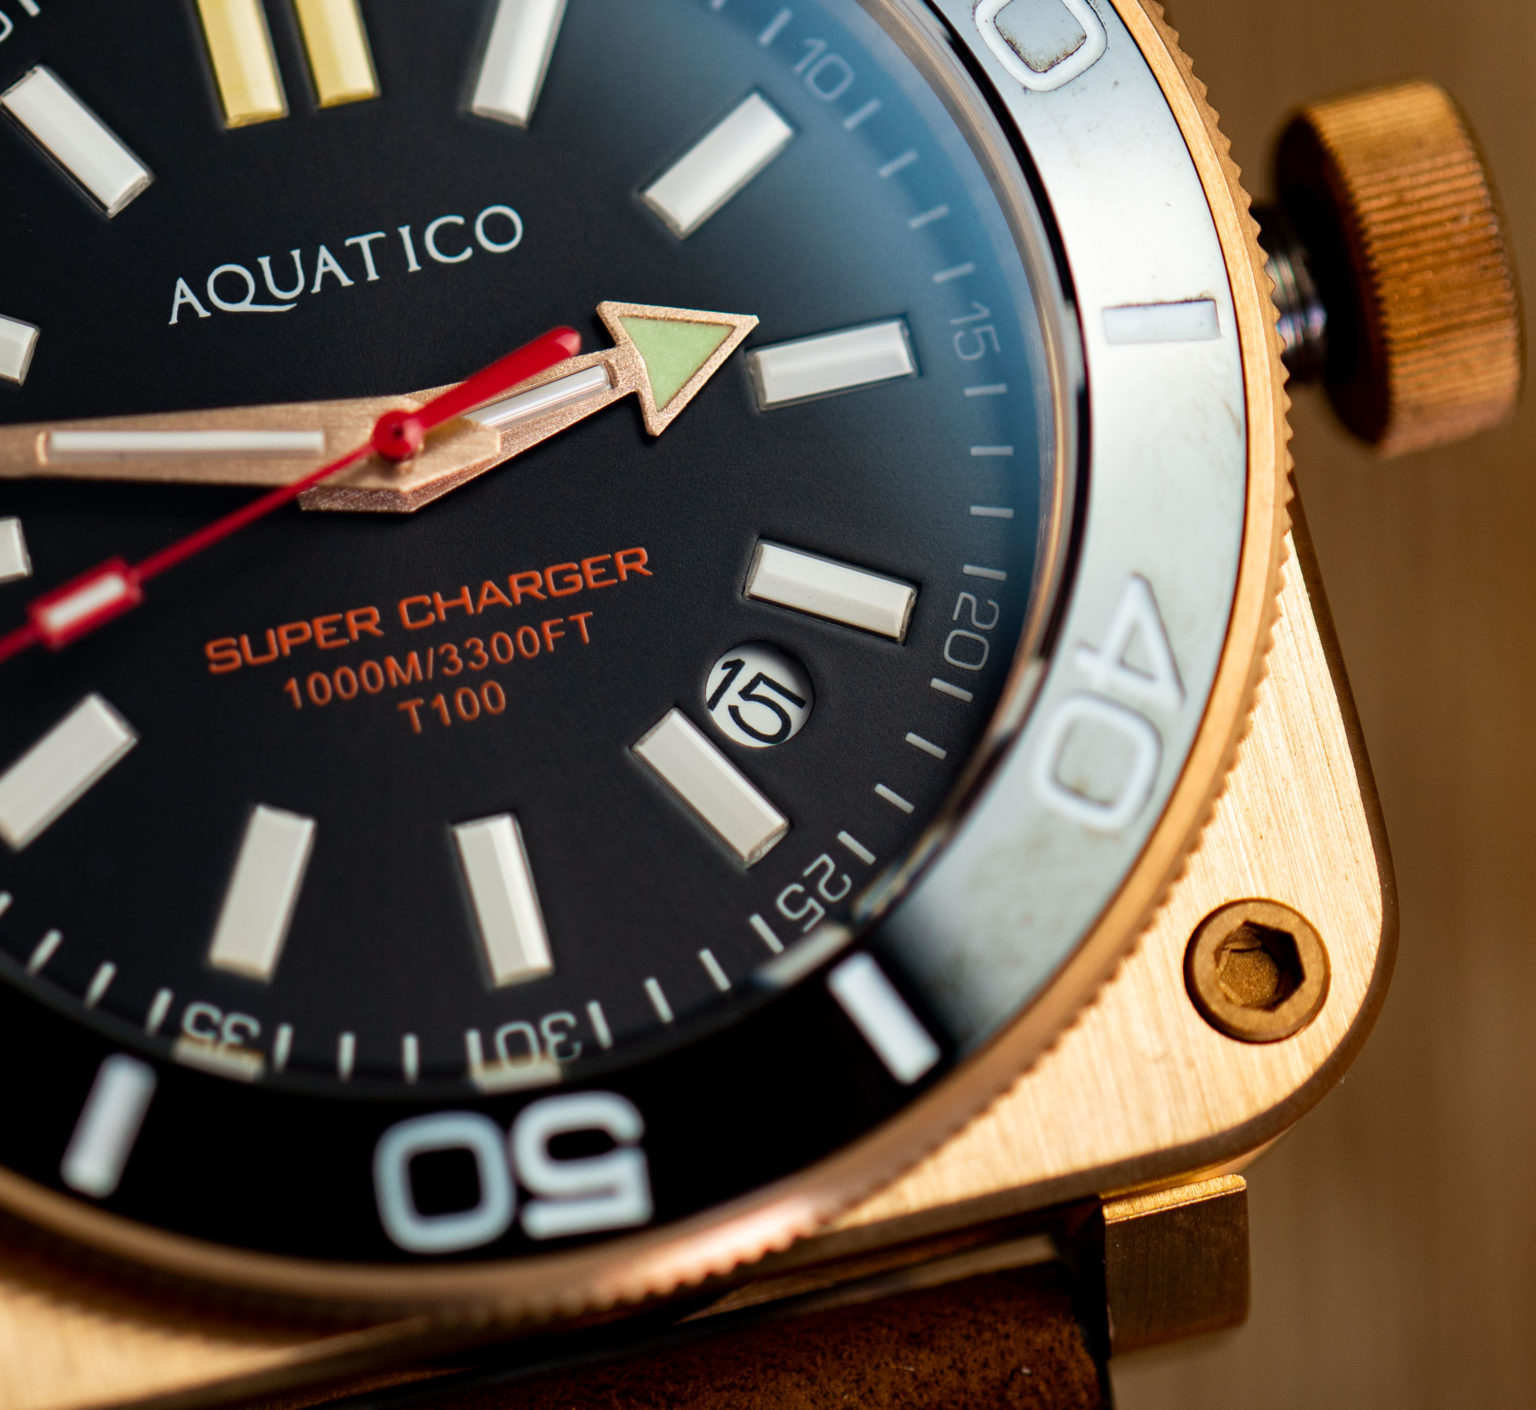 aquatico supercharger watch